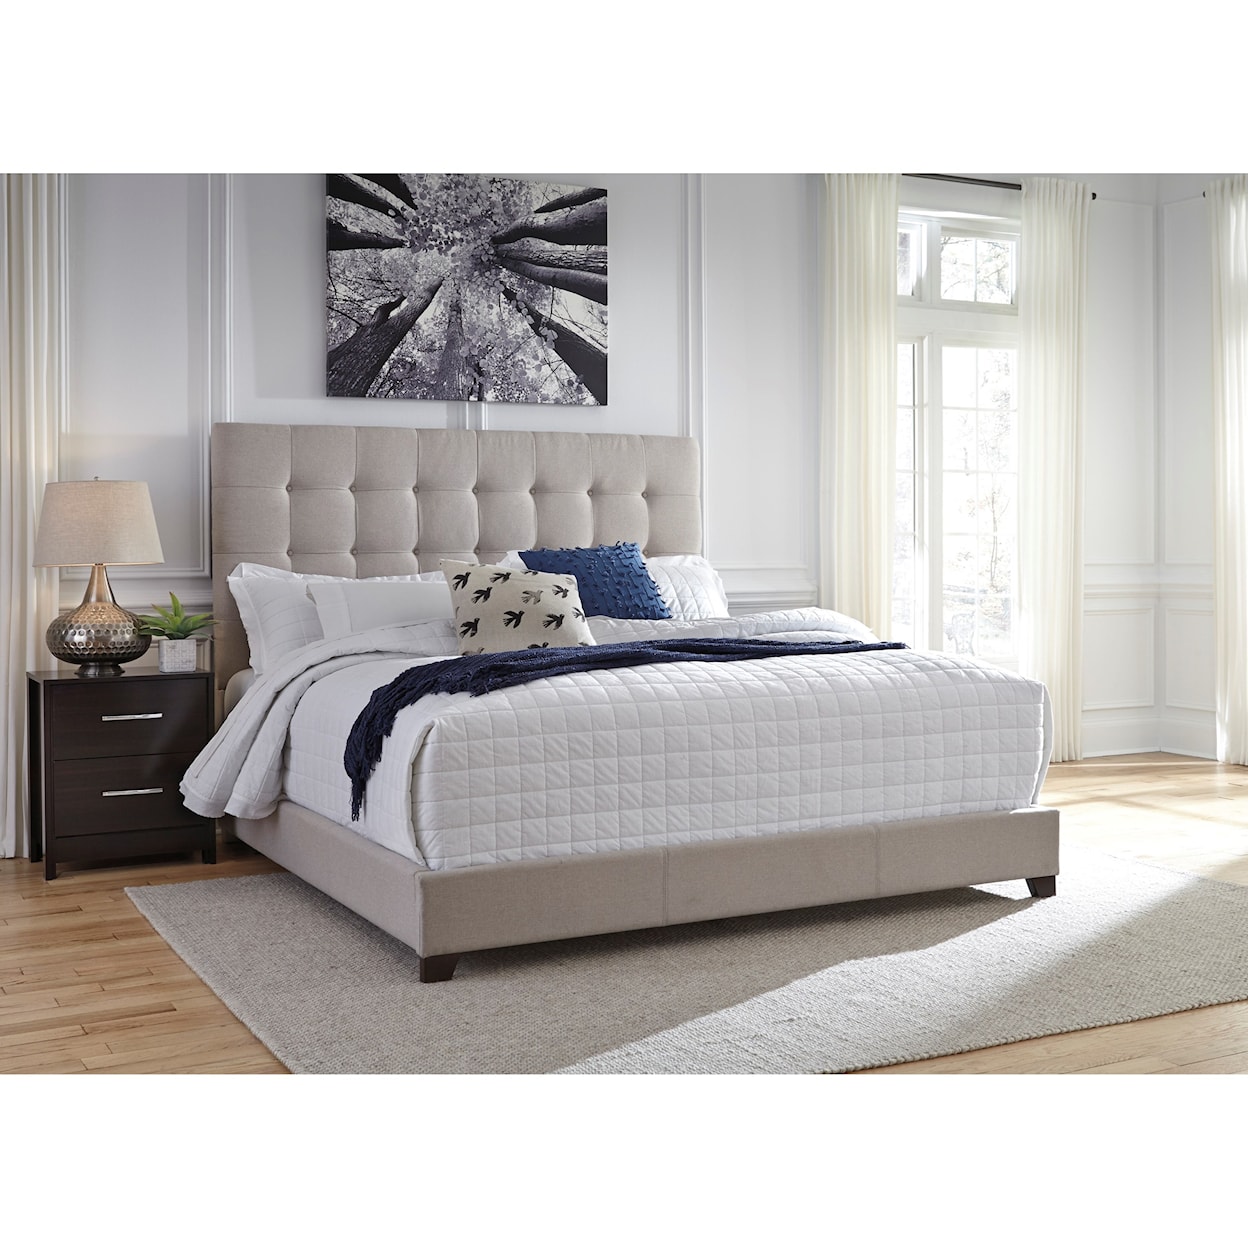 Ashley Furniture Signature Design Dolante King Upholstered Bed